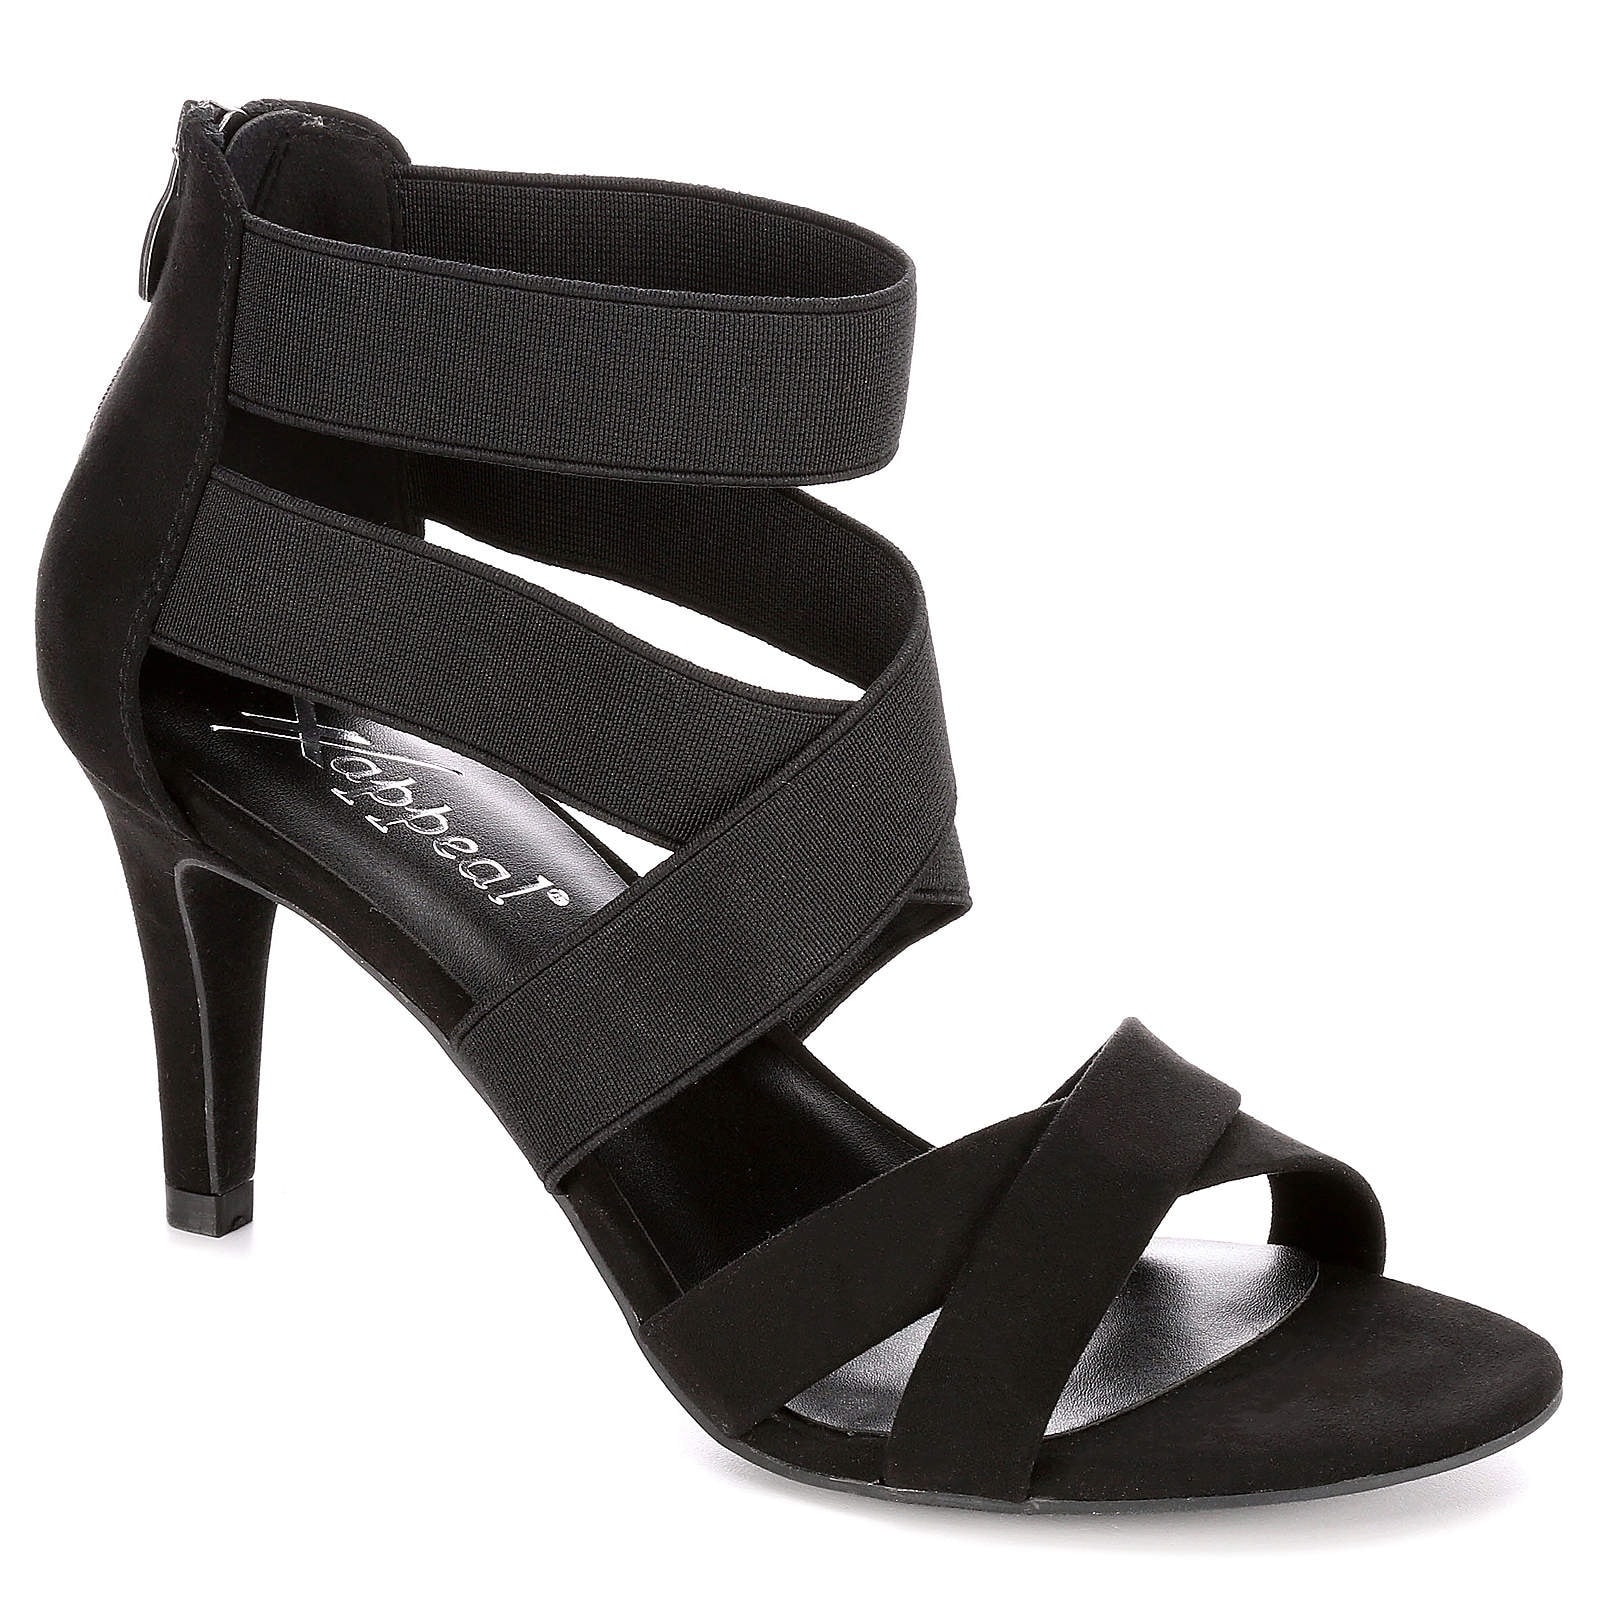 sandals high heels black